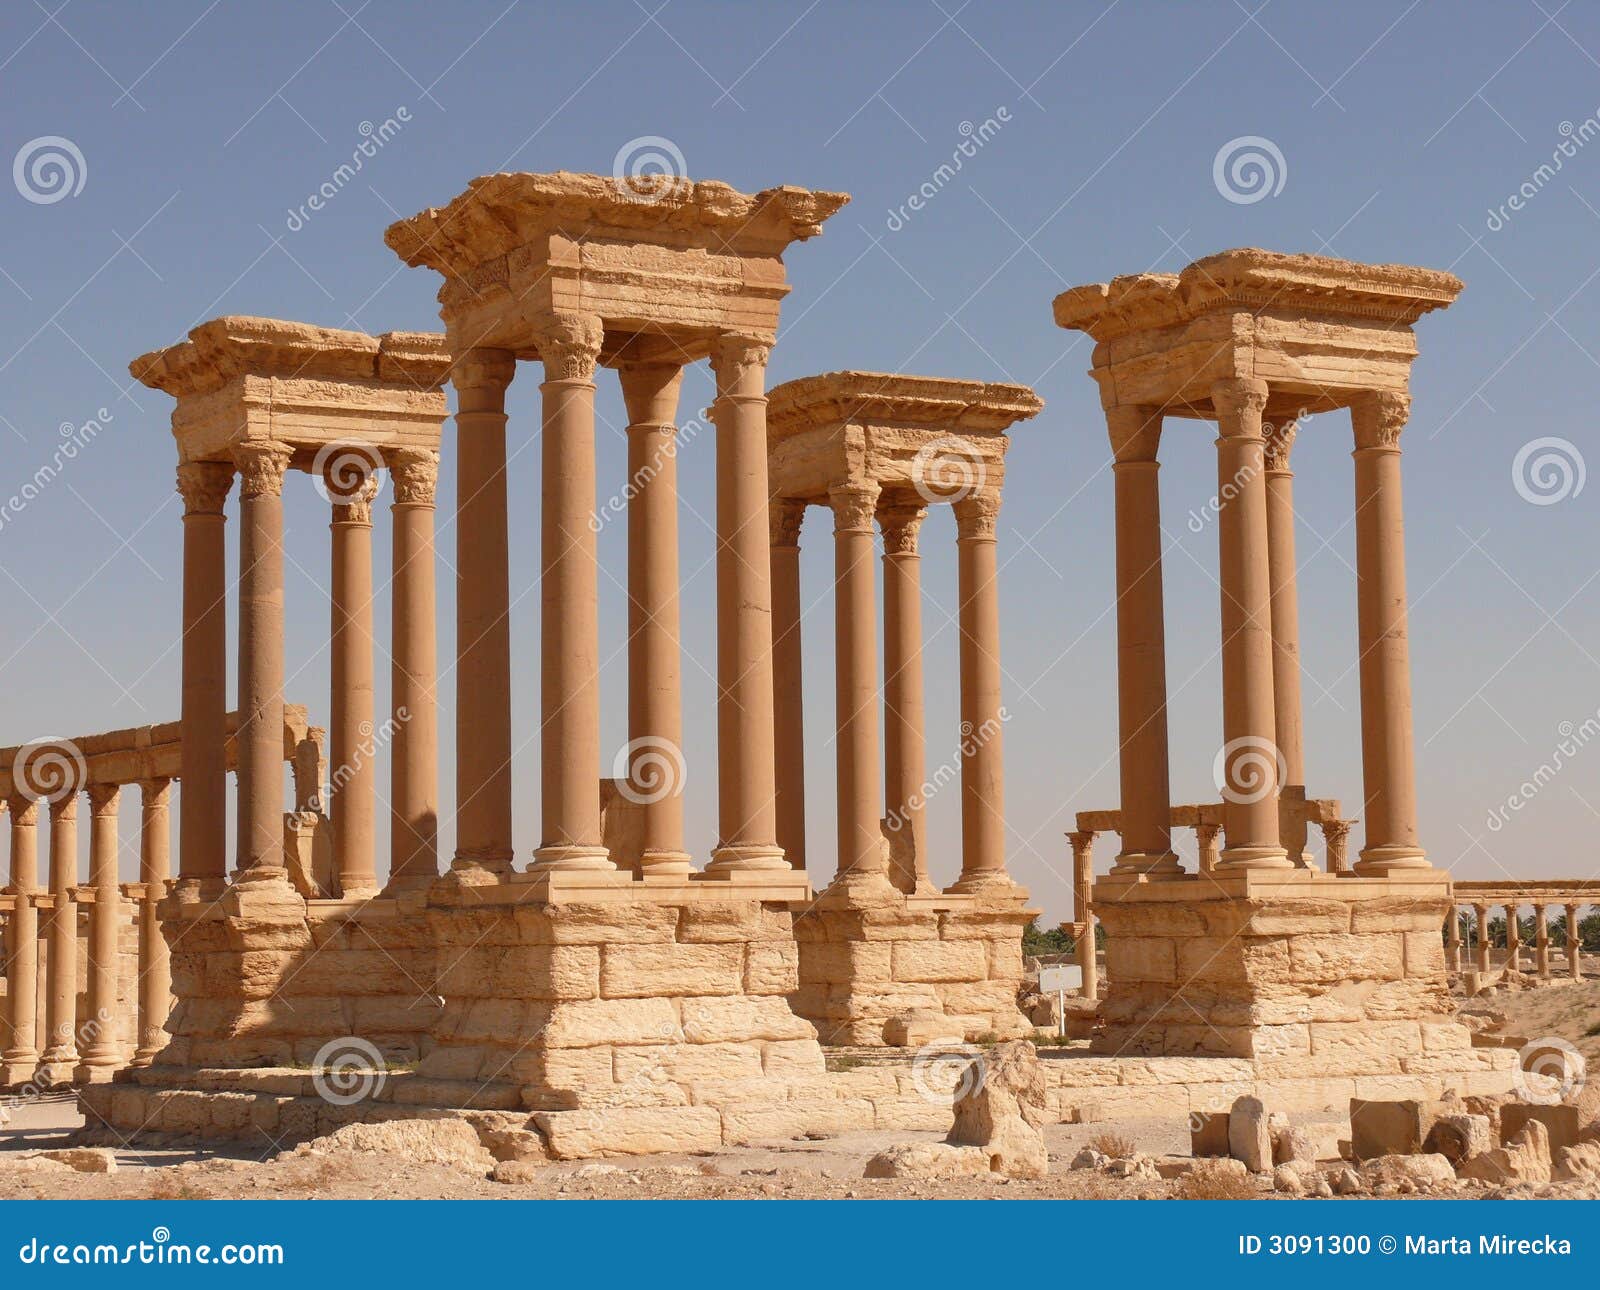 ancient columns, palmyra syria